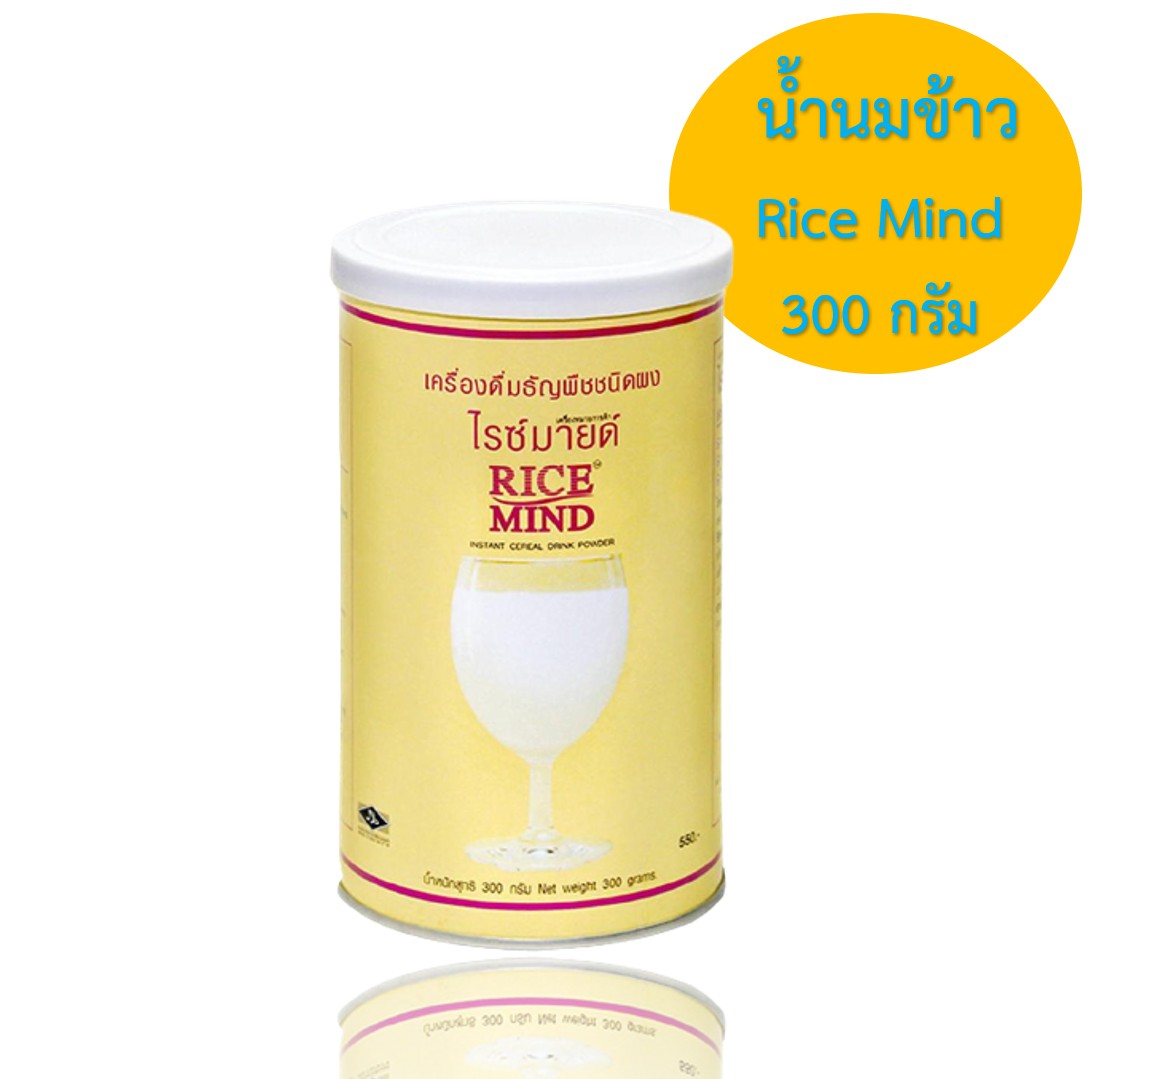 Rice mind ไรซ์มายด์ เครื่องดื่มธัญพืชชนิดผง 300 กรัม